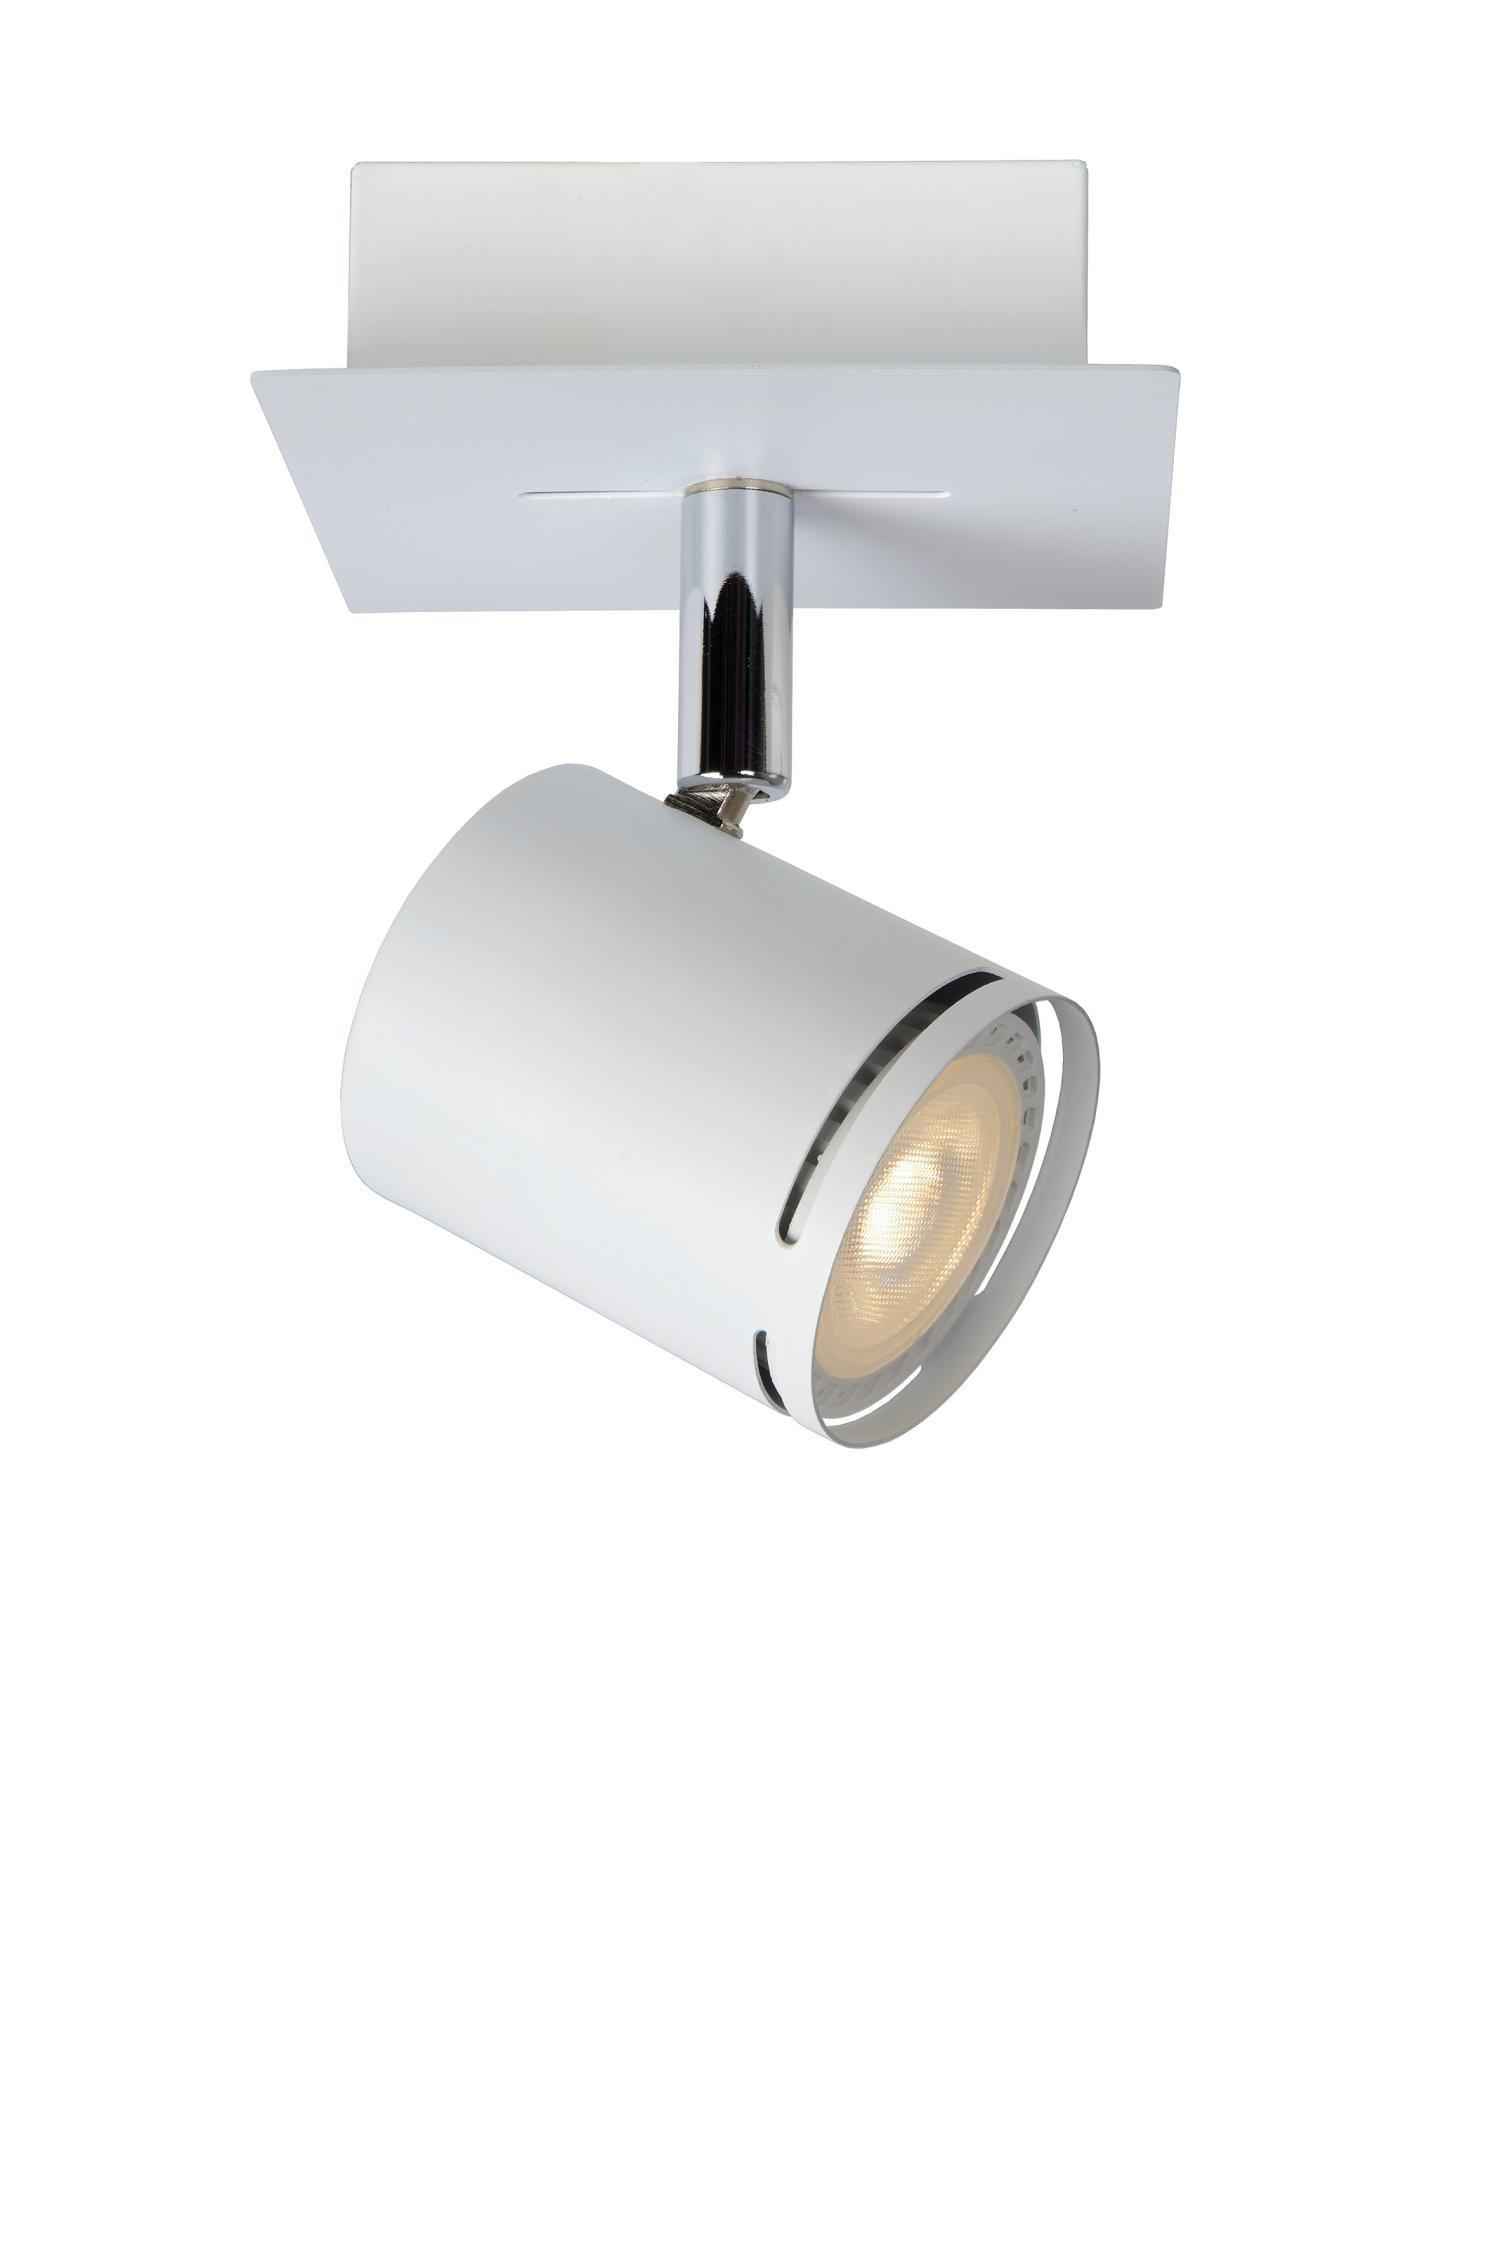 Photos - Floodlight / Street Light 'RILOU' Dimmable Rotatable Stylish Indoor LED Ceiling Spotlight GU10